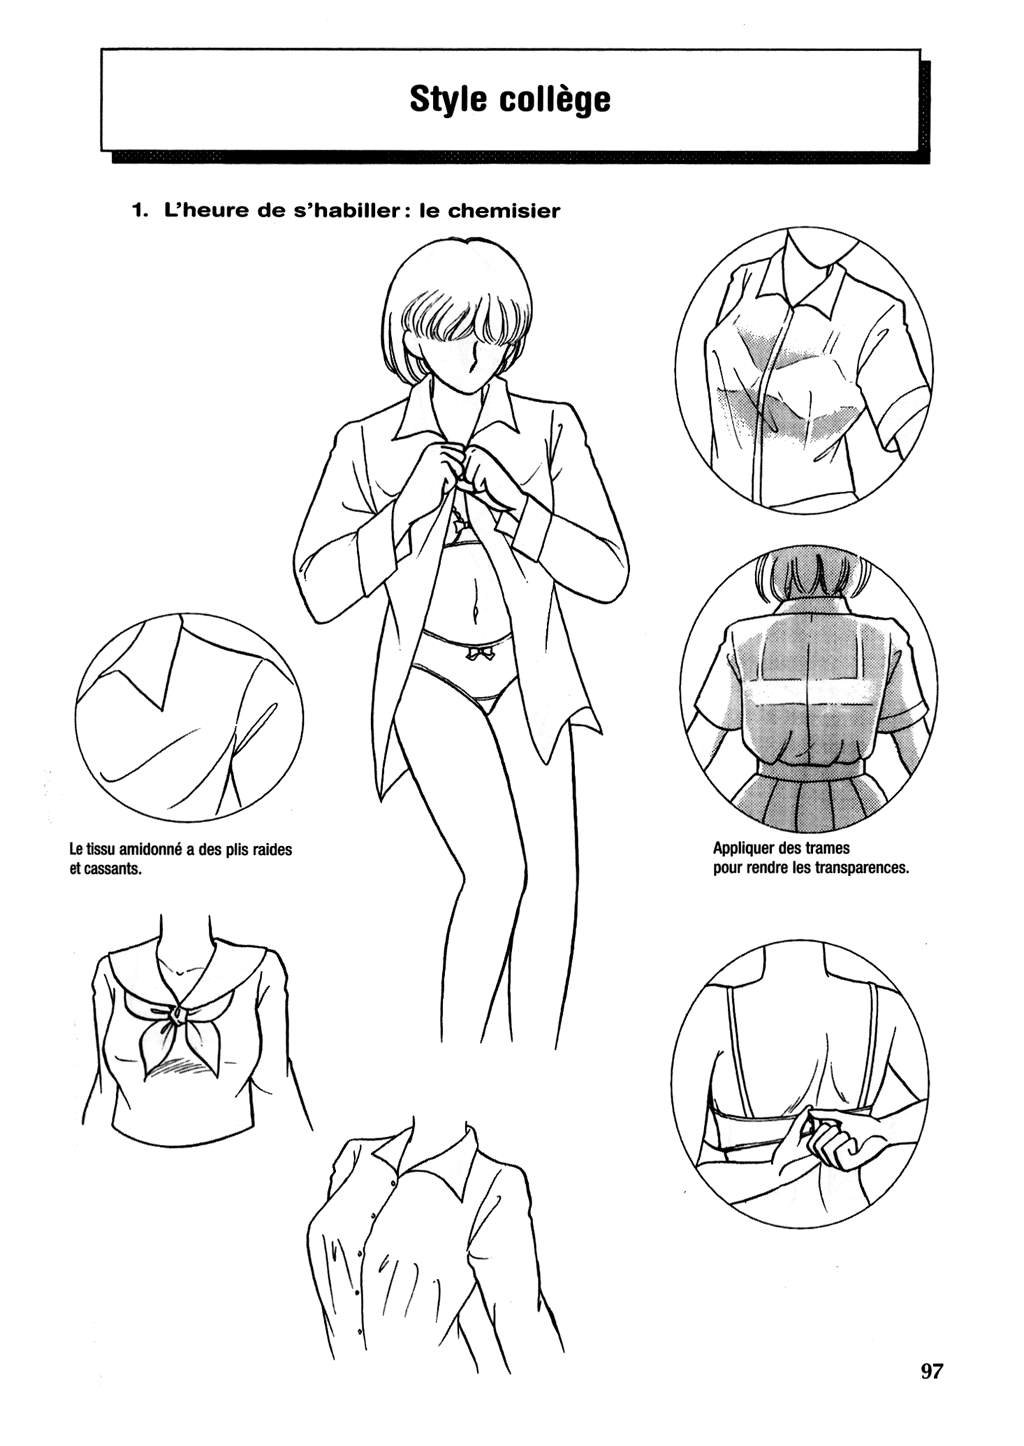 Le dessin du Manga 04 - Personnages feminin, Attitudes, Expressions numero d'image 97